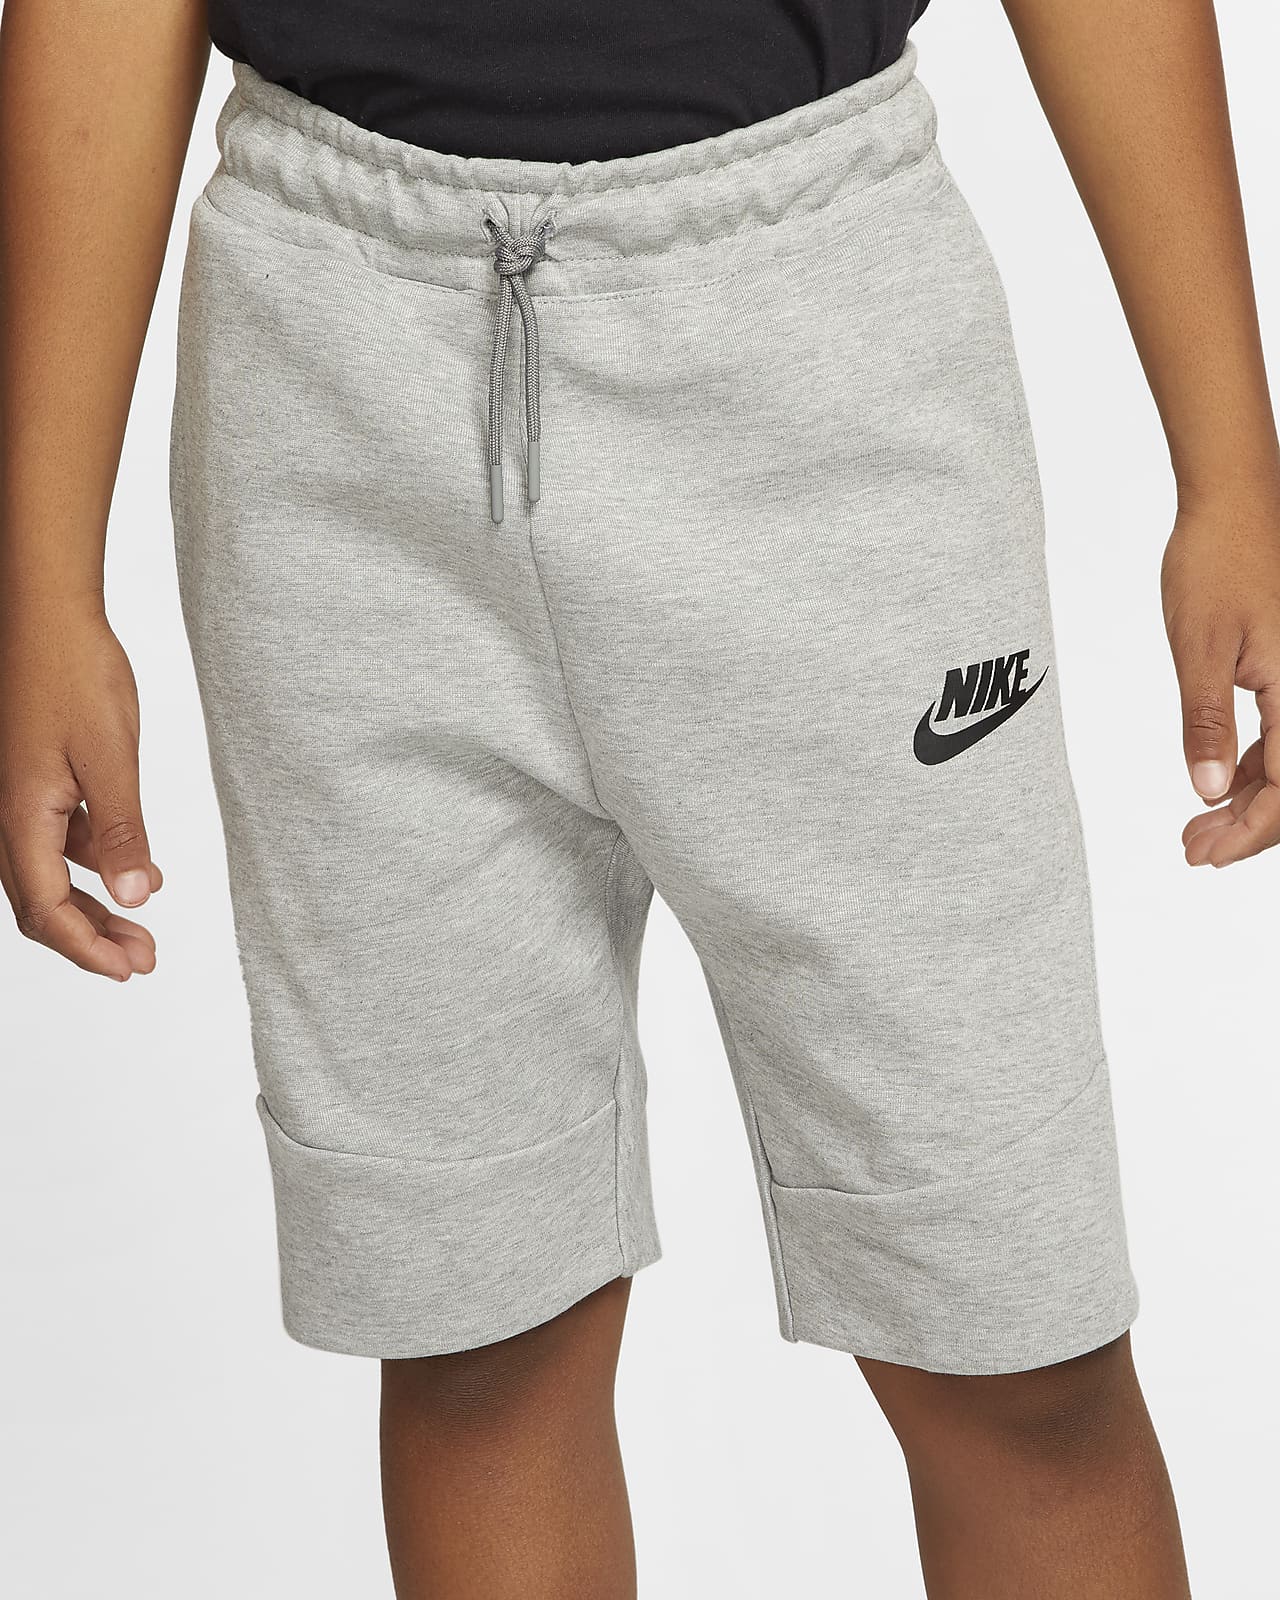 Shorts para niños talla grande Nike 